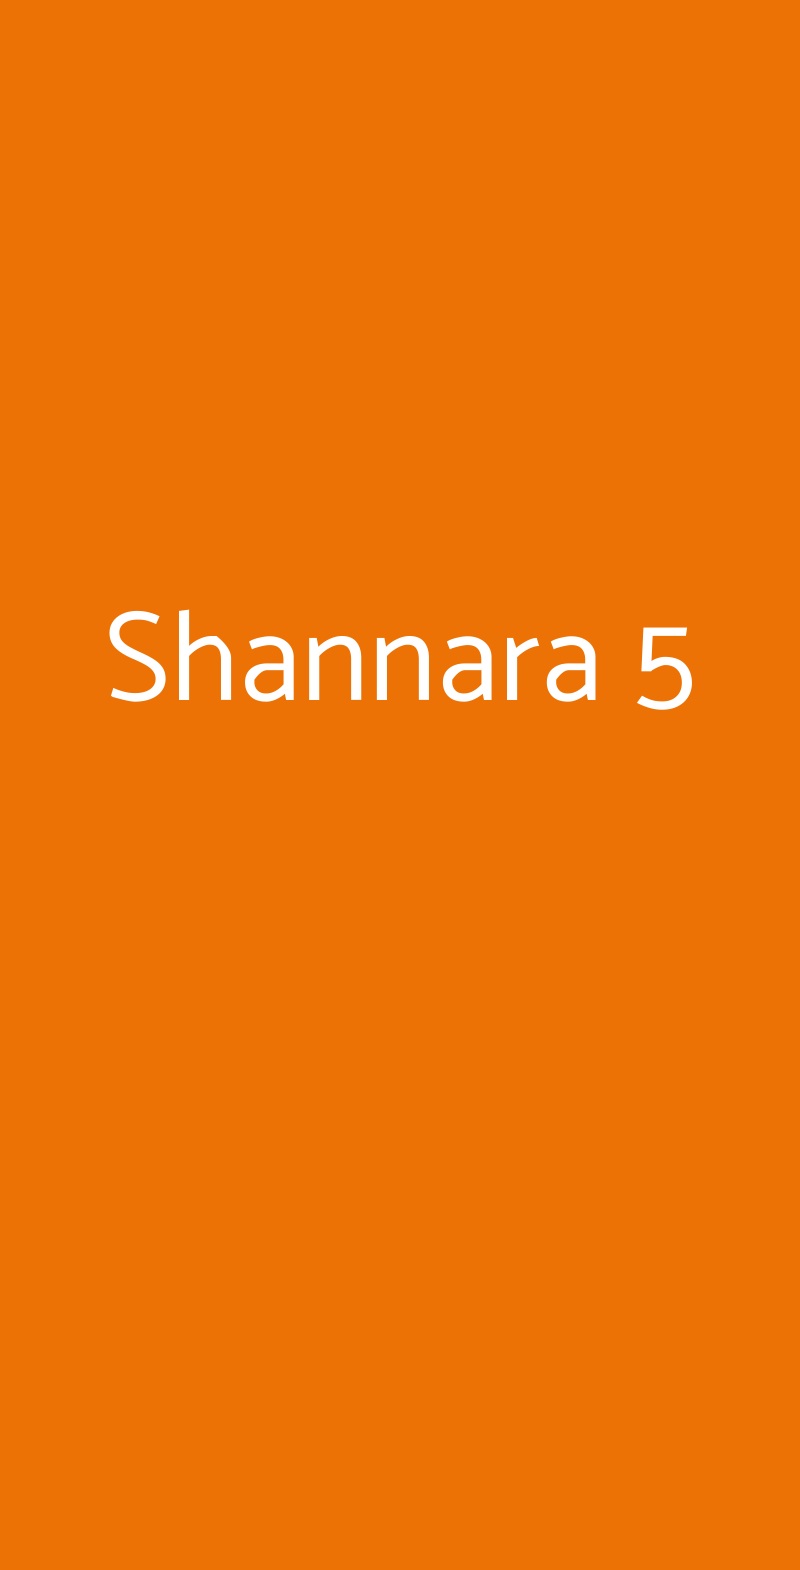 Shannara 5 Milano menù 1 pagina